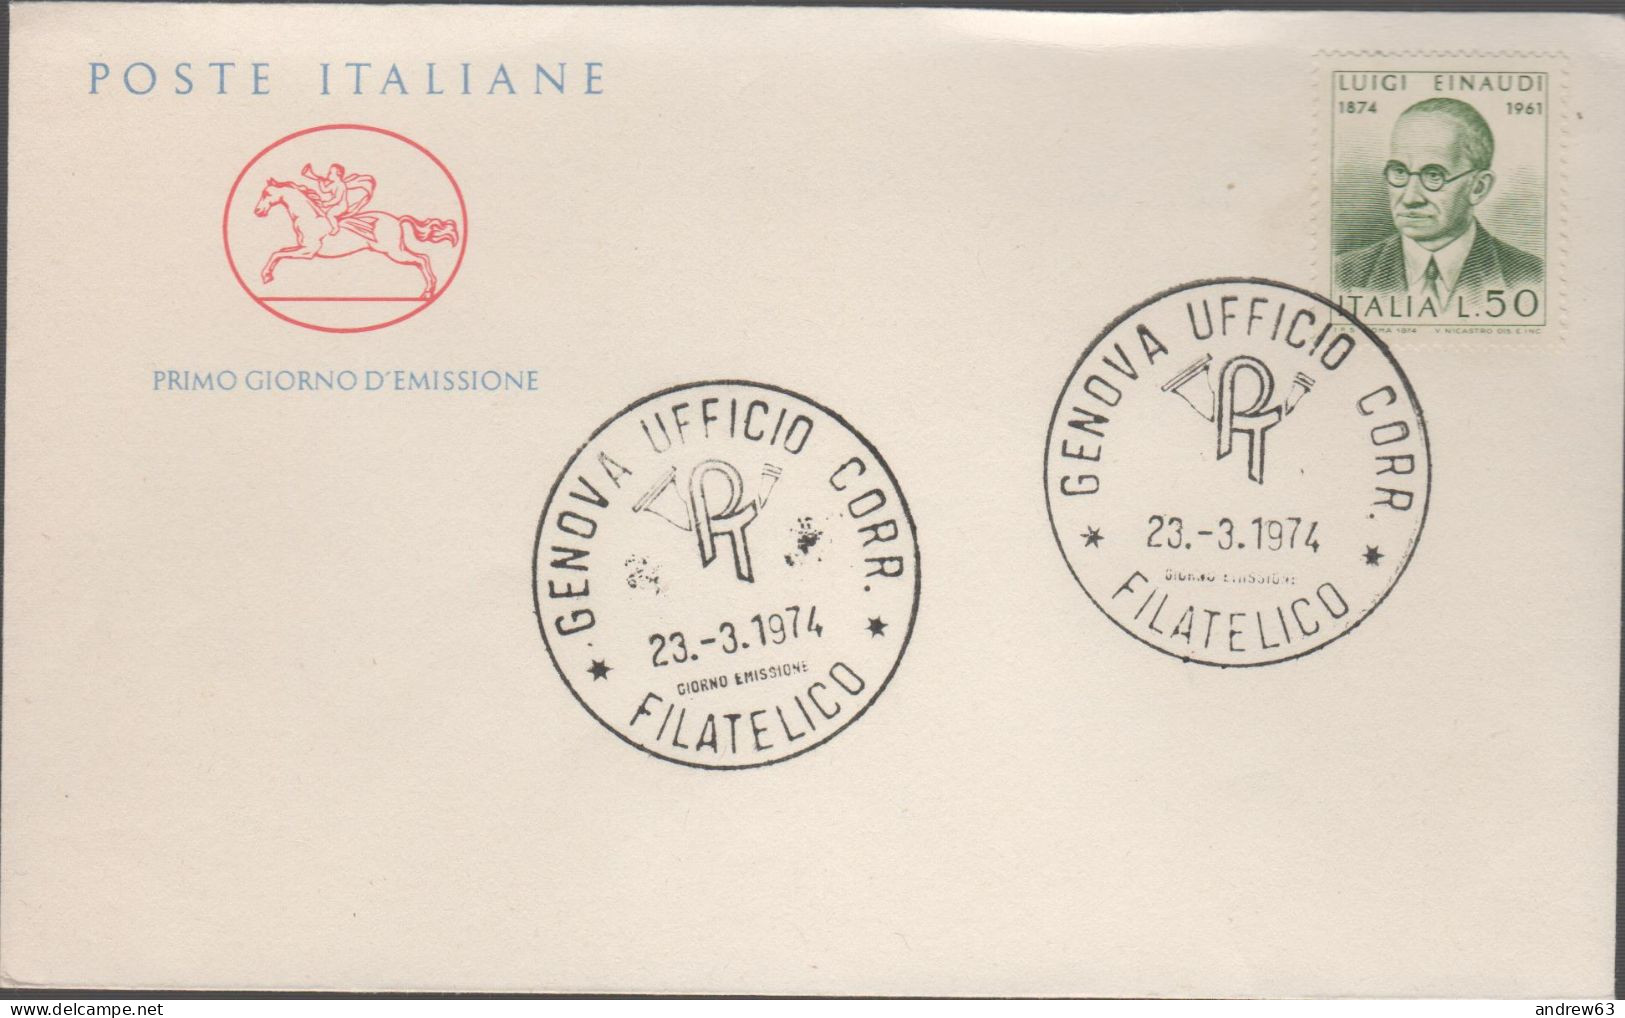 ITALIA - ITALIE - ITALY - 1974 - Centenario Della Nascita Di Luigi Einaudi - FDC Cavallino - FDC